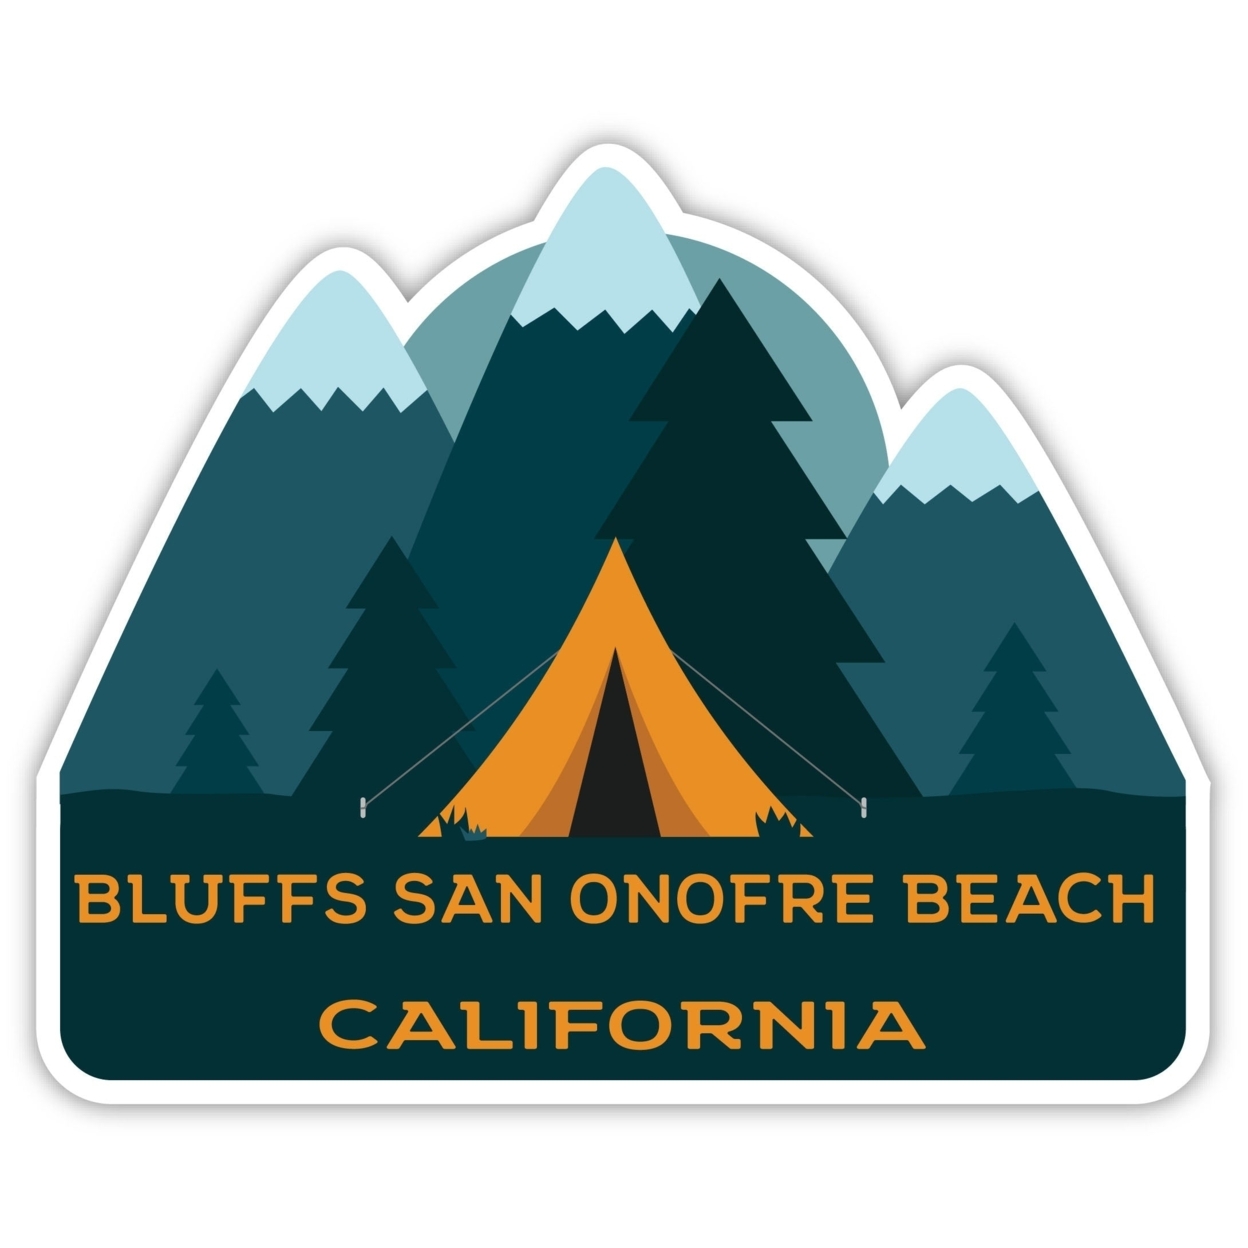 Bluffs San Onofre Beach California Souvenir Decorative Stickers (Choose Theme And Size) - Single Unit, 8-Inch, Camp Life